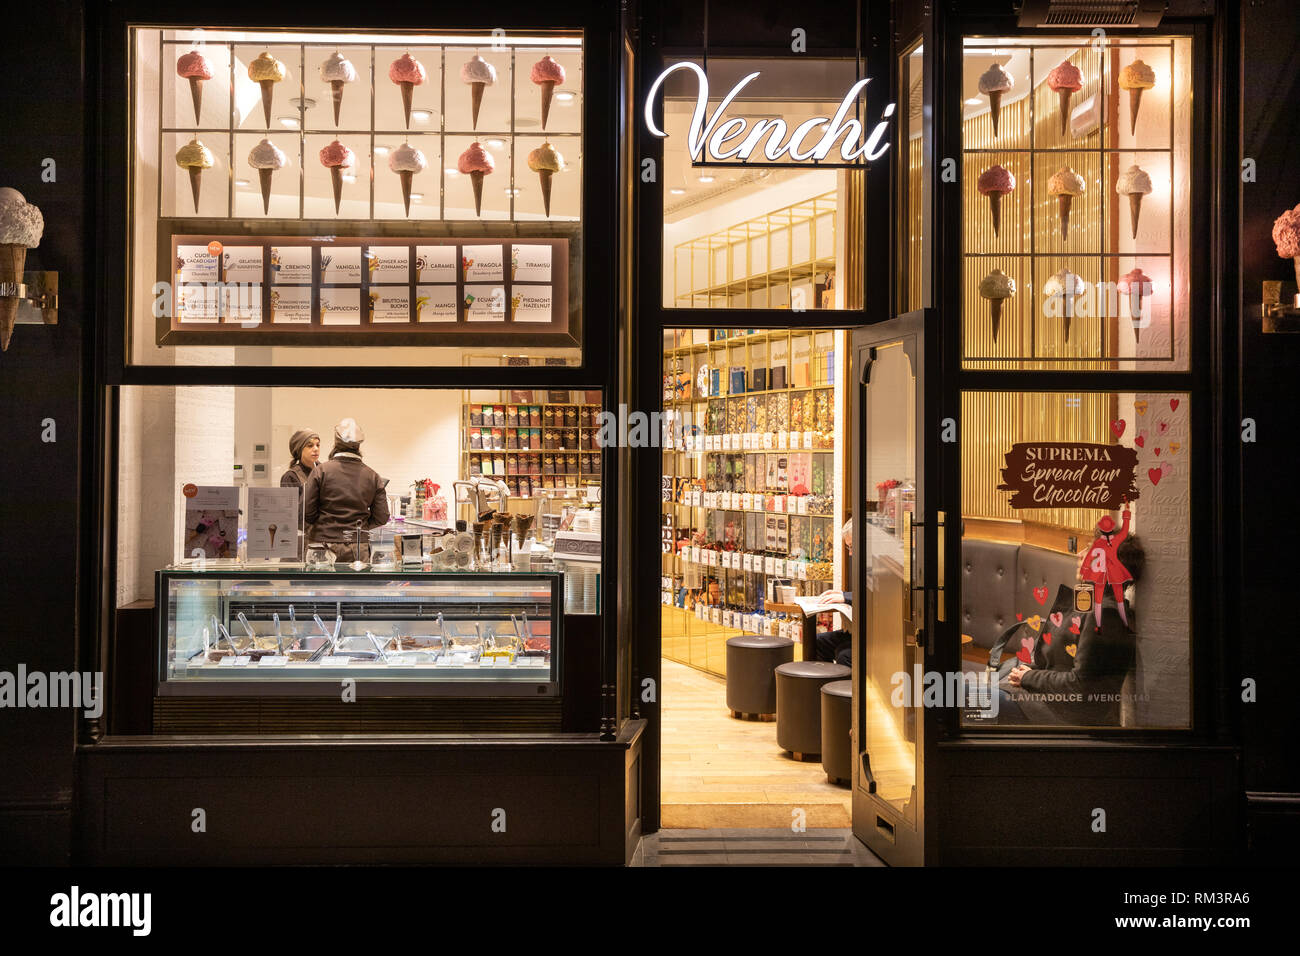 Venchi chocolate shop in London, South Kensington, UK Stock Photo